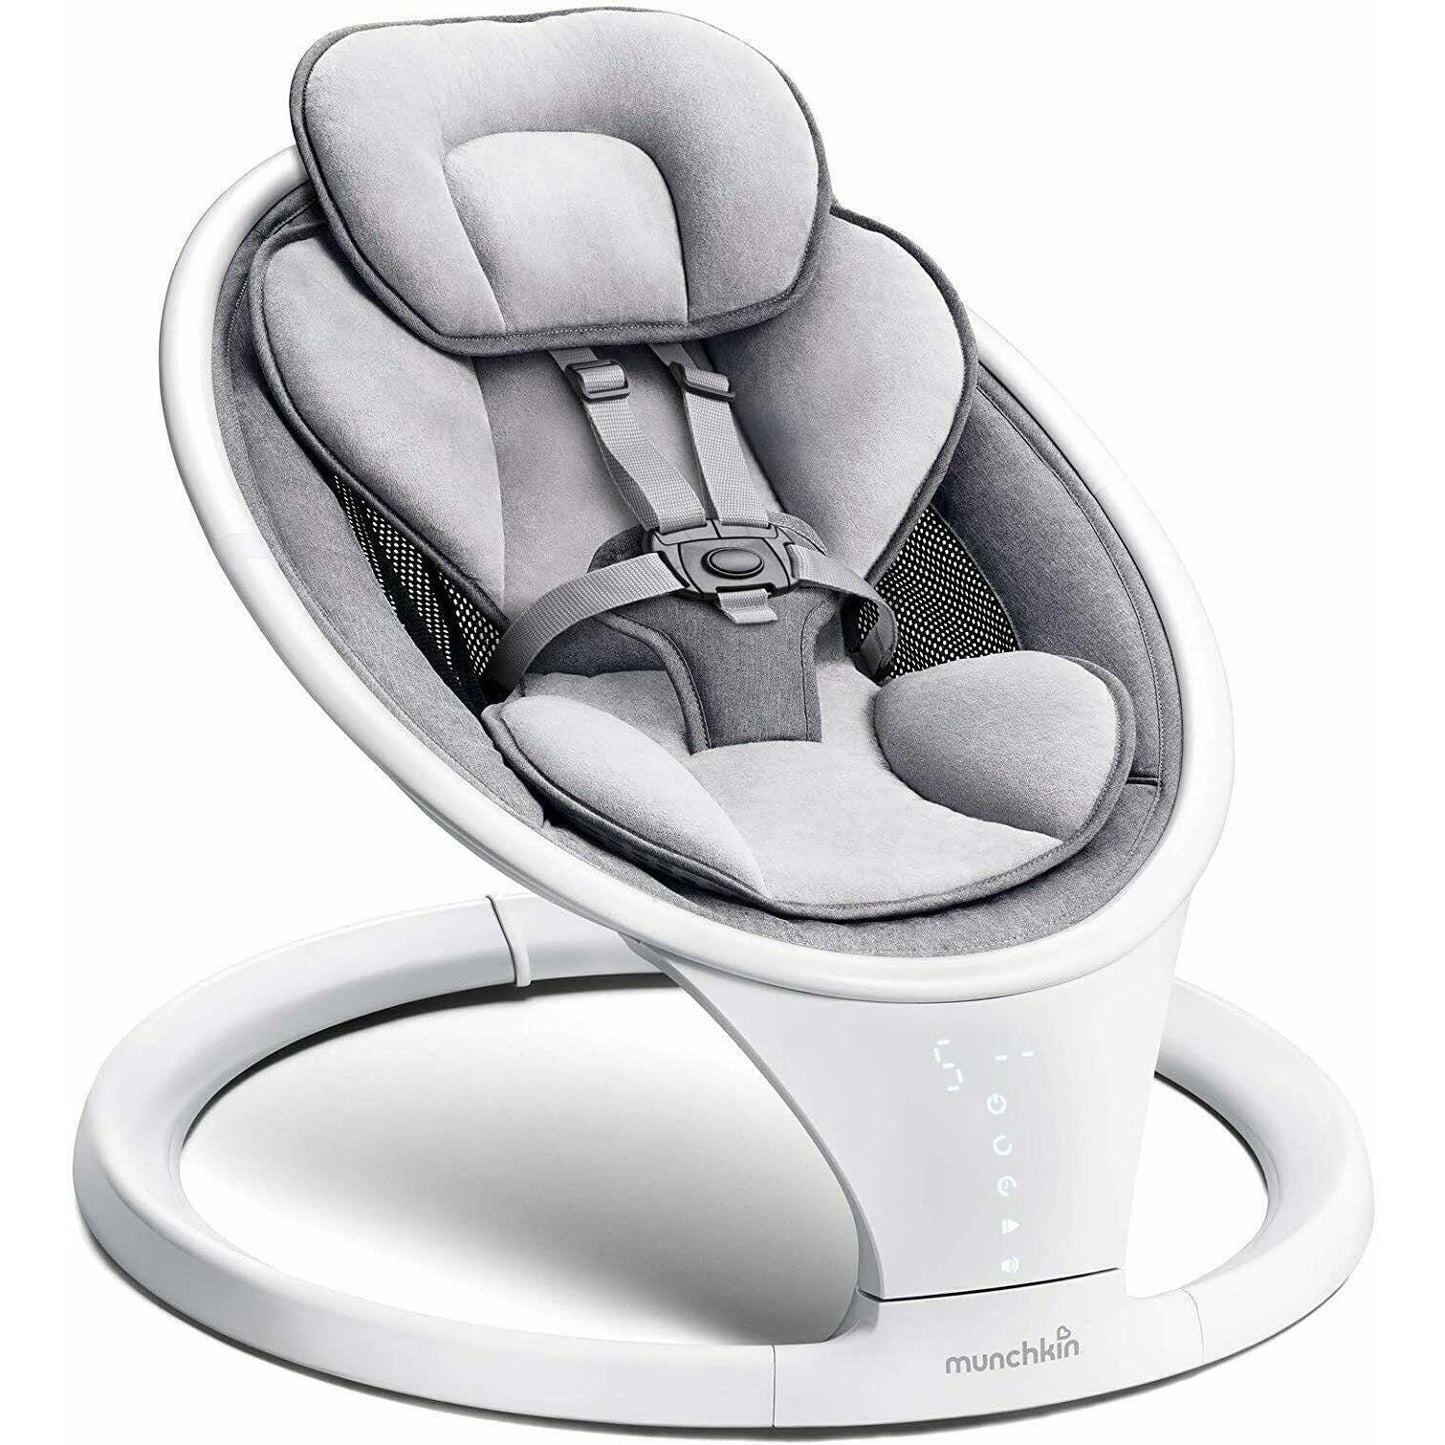 Munchkin Baby Swing Bouncer Seat Auto Motion Bluetooth Portable Rocker Remote